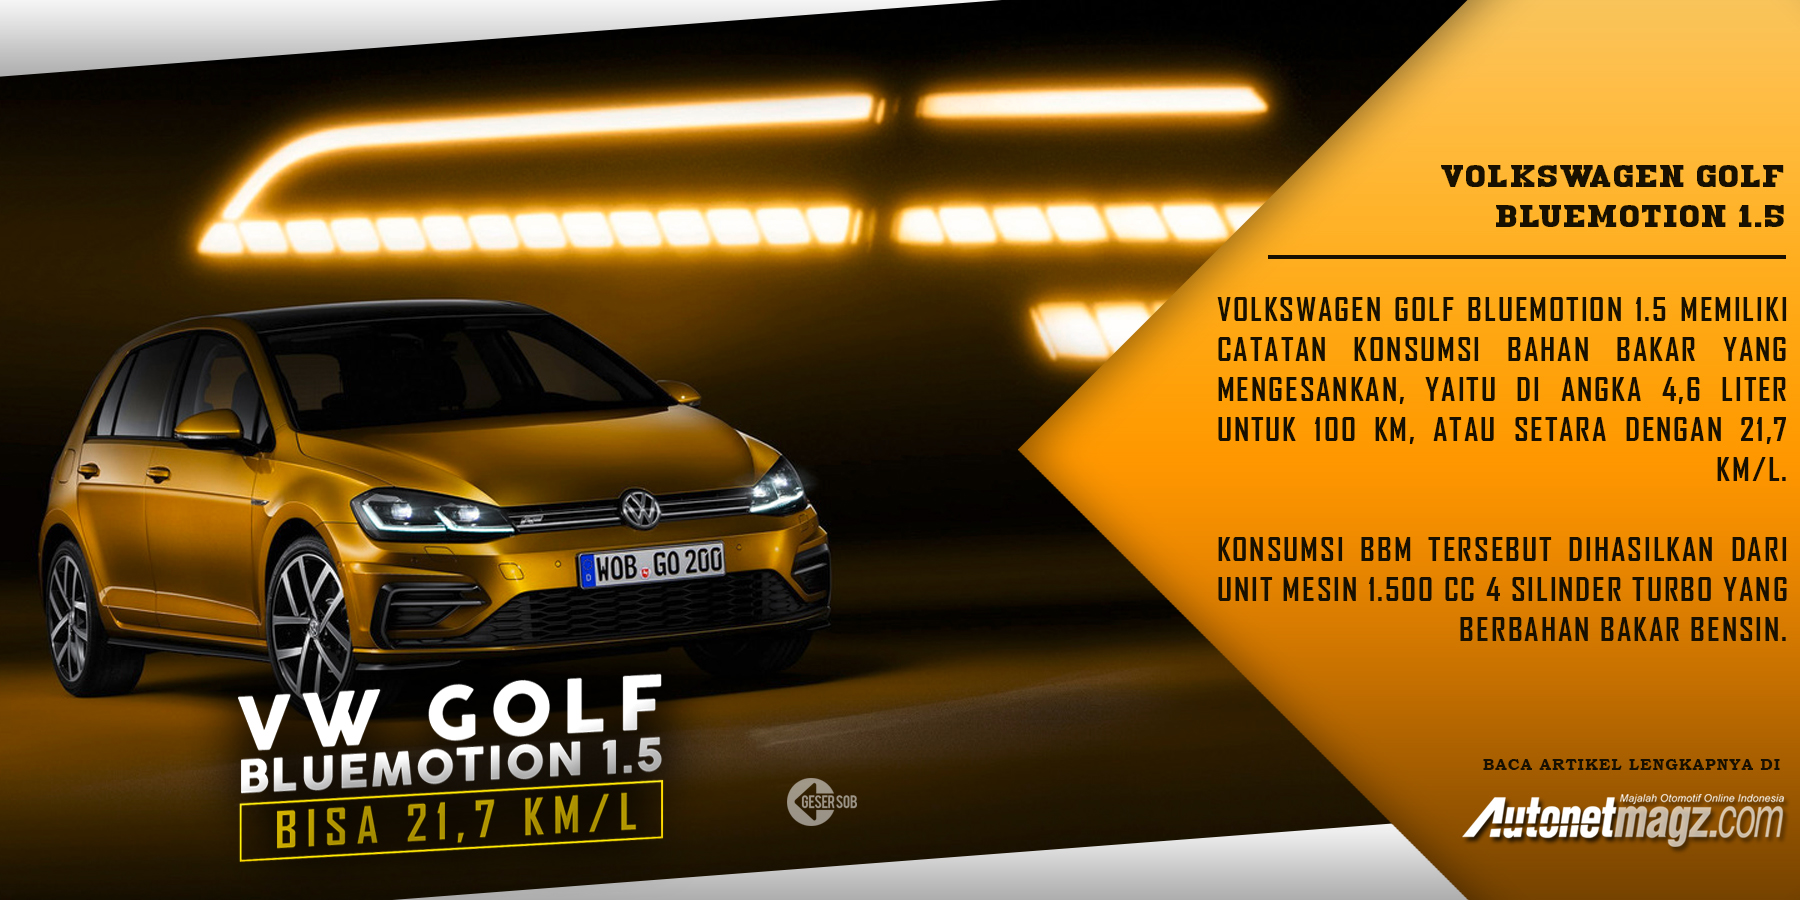 Berita, vw golf bluemotion: Volkswagen Golf BlueMotion 1.5, Super Irit Sampai 21,7 Km/L